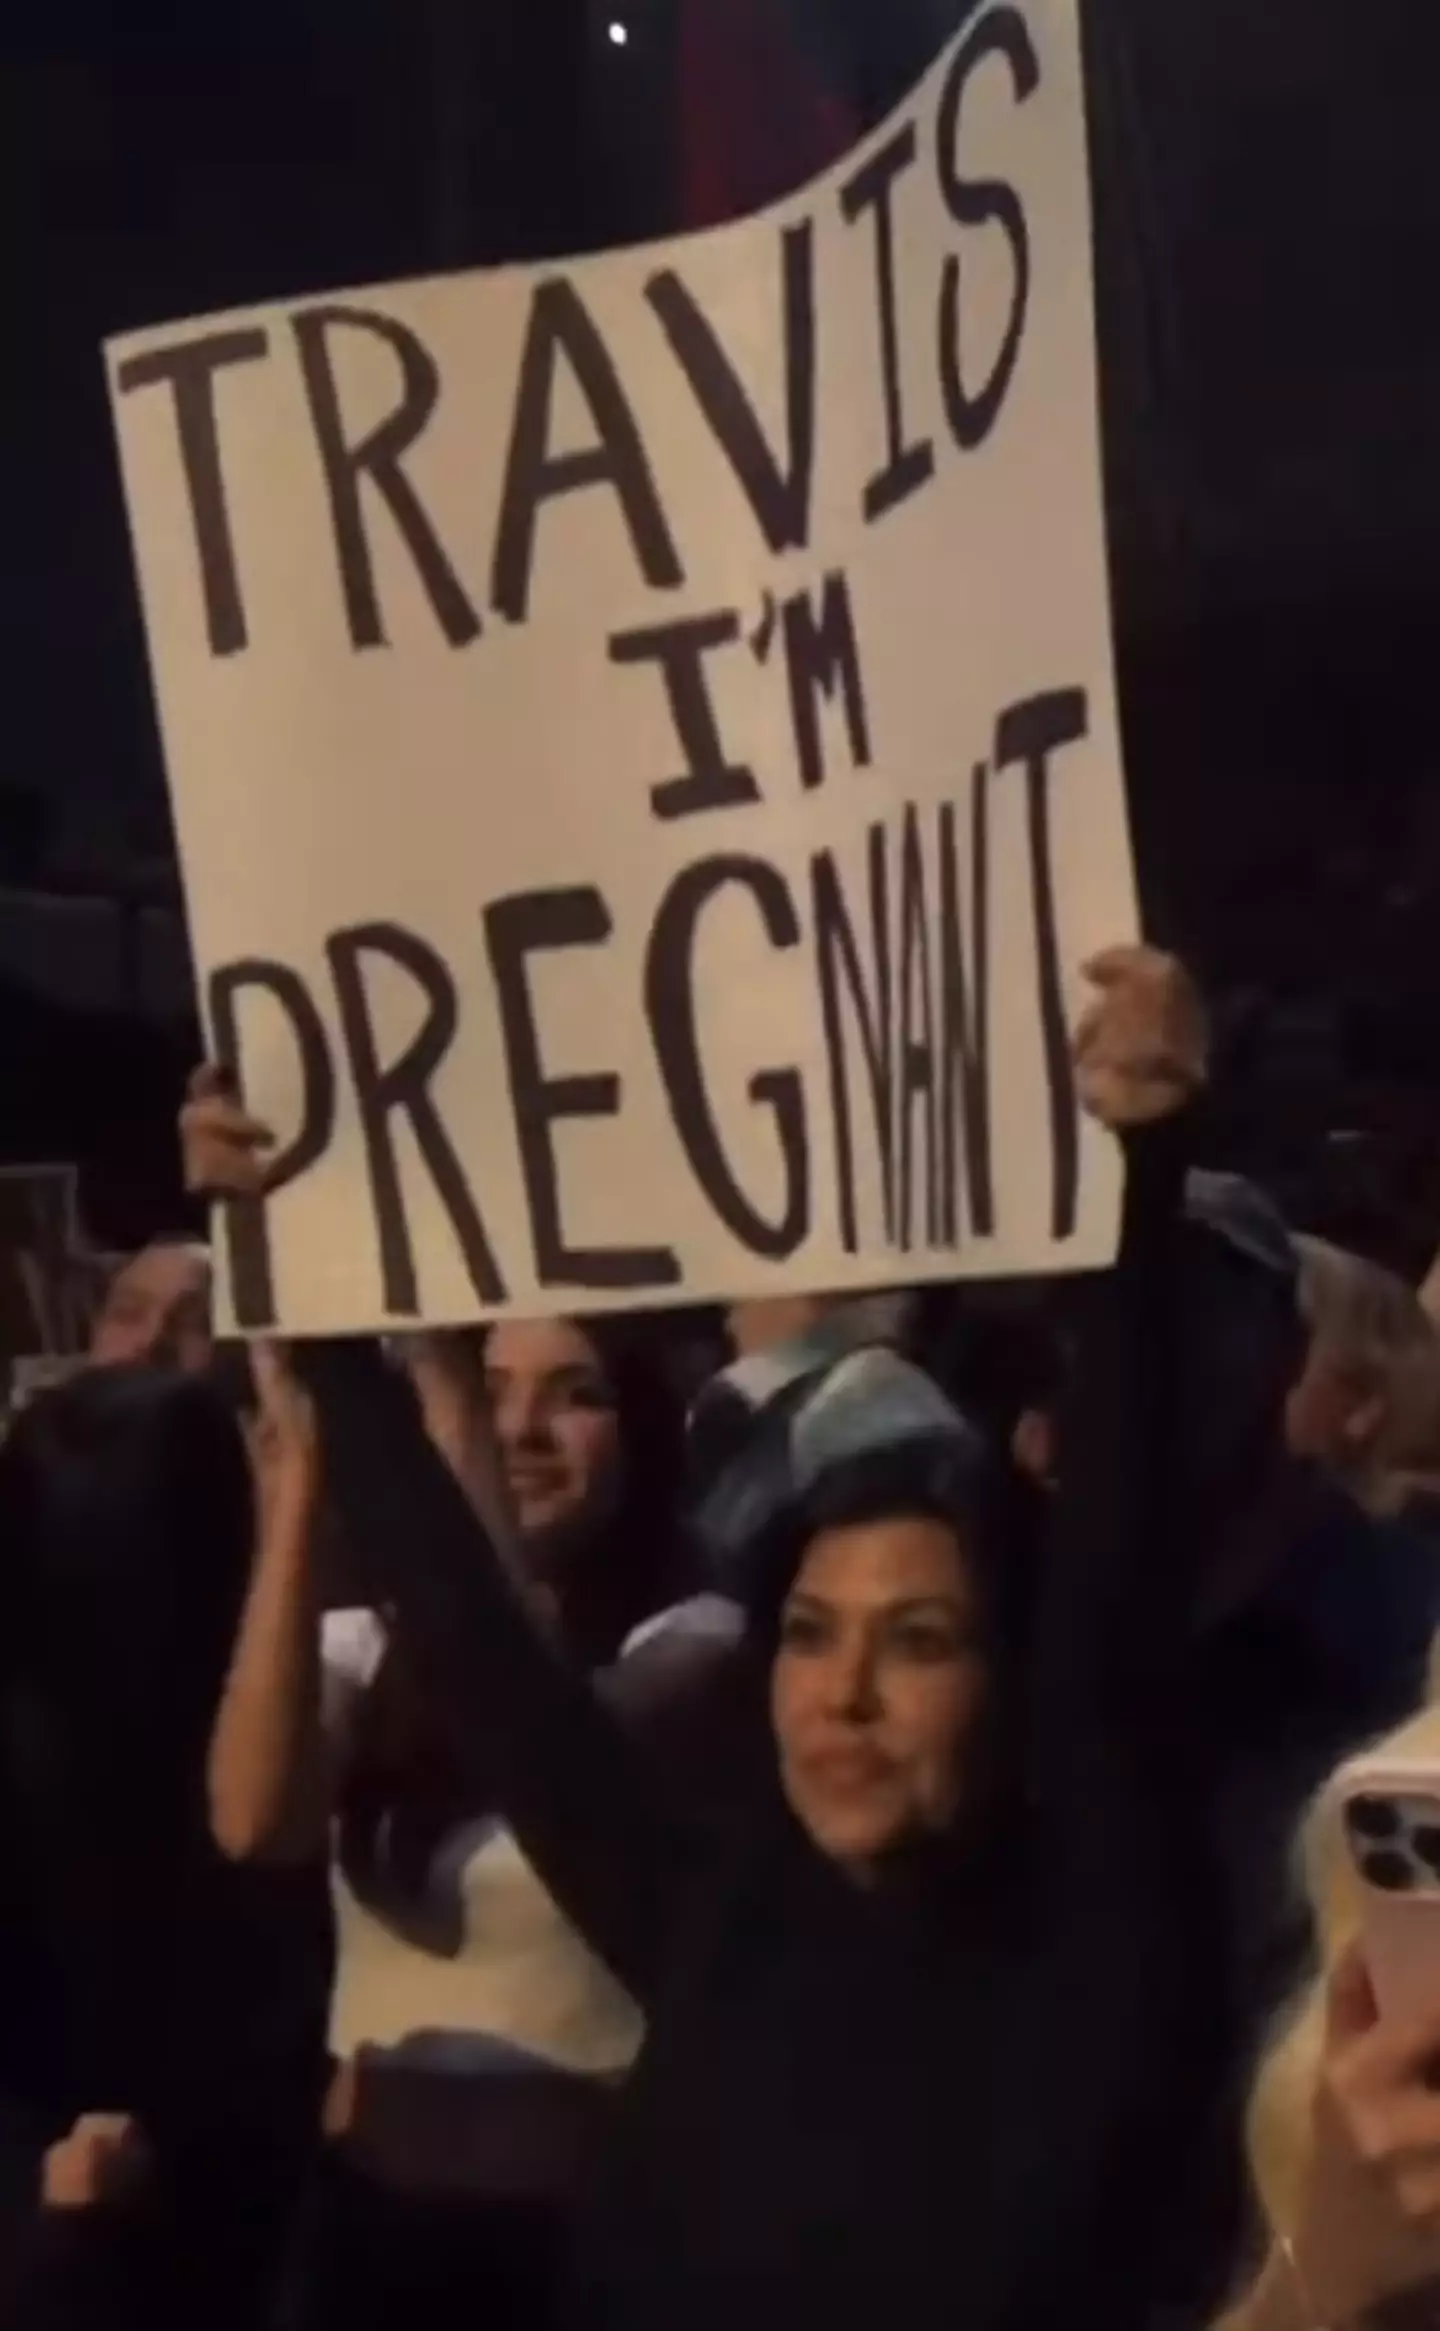 Kourtney Kardashian held up a 'Travis I'm pregnant' sign to confirm the news.